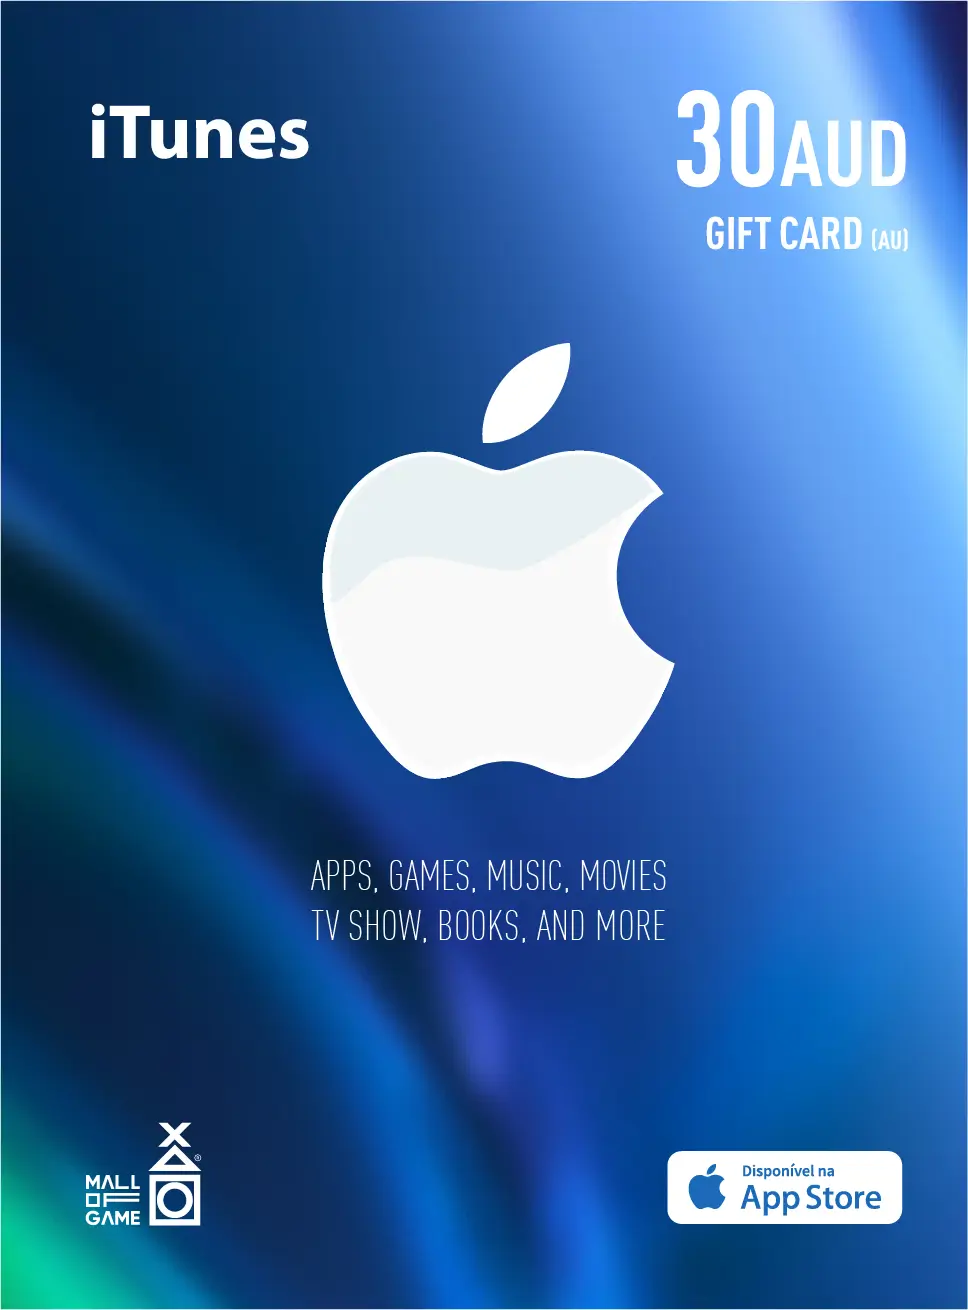 iTunes AUD30 Gift Card (AU)